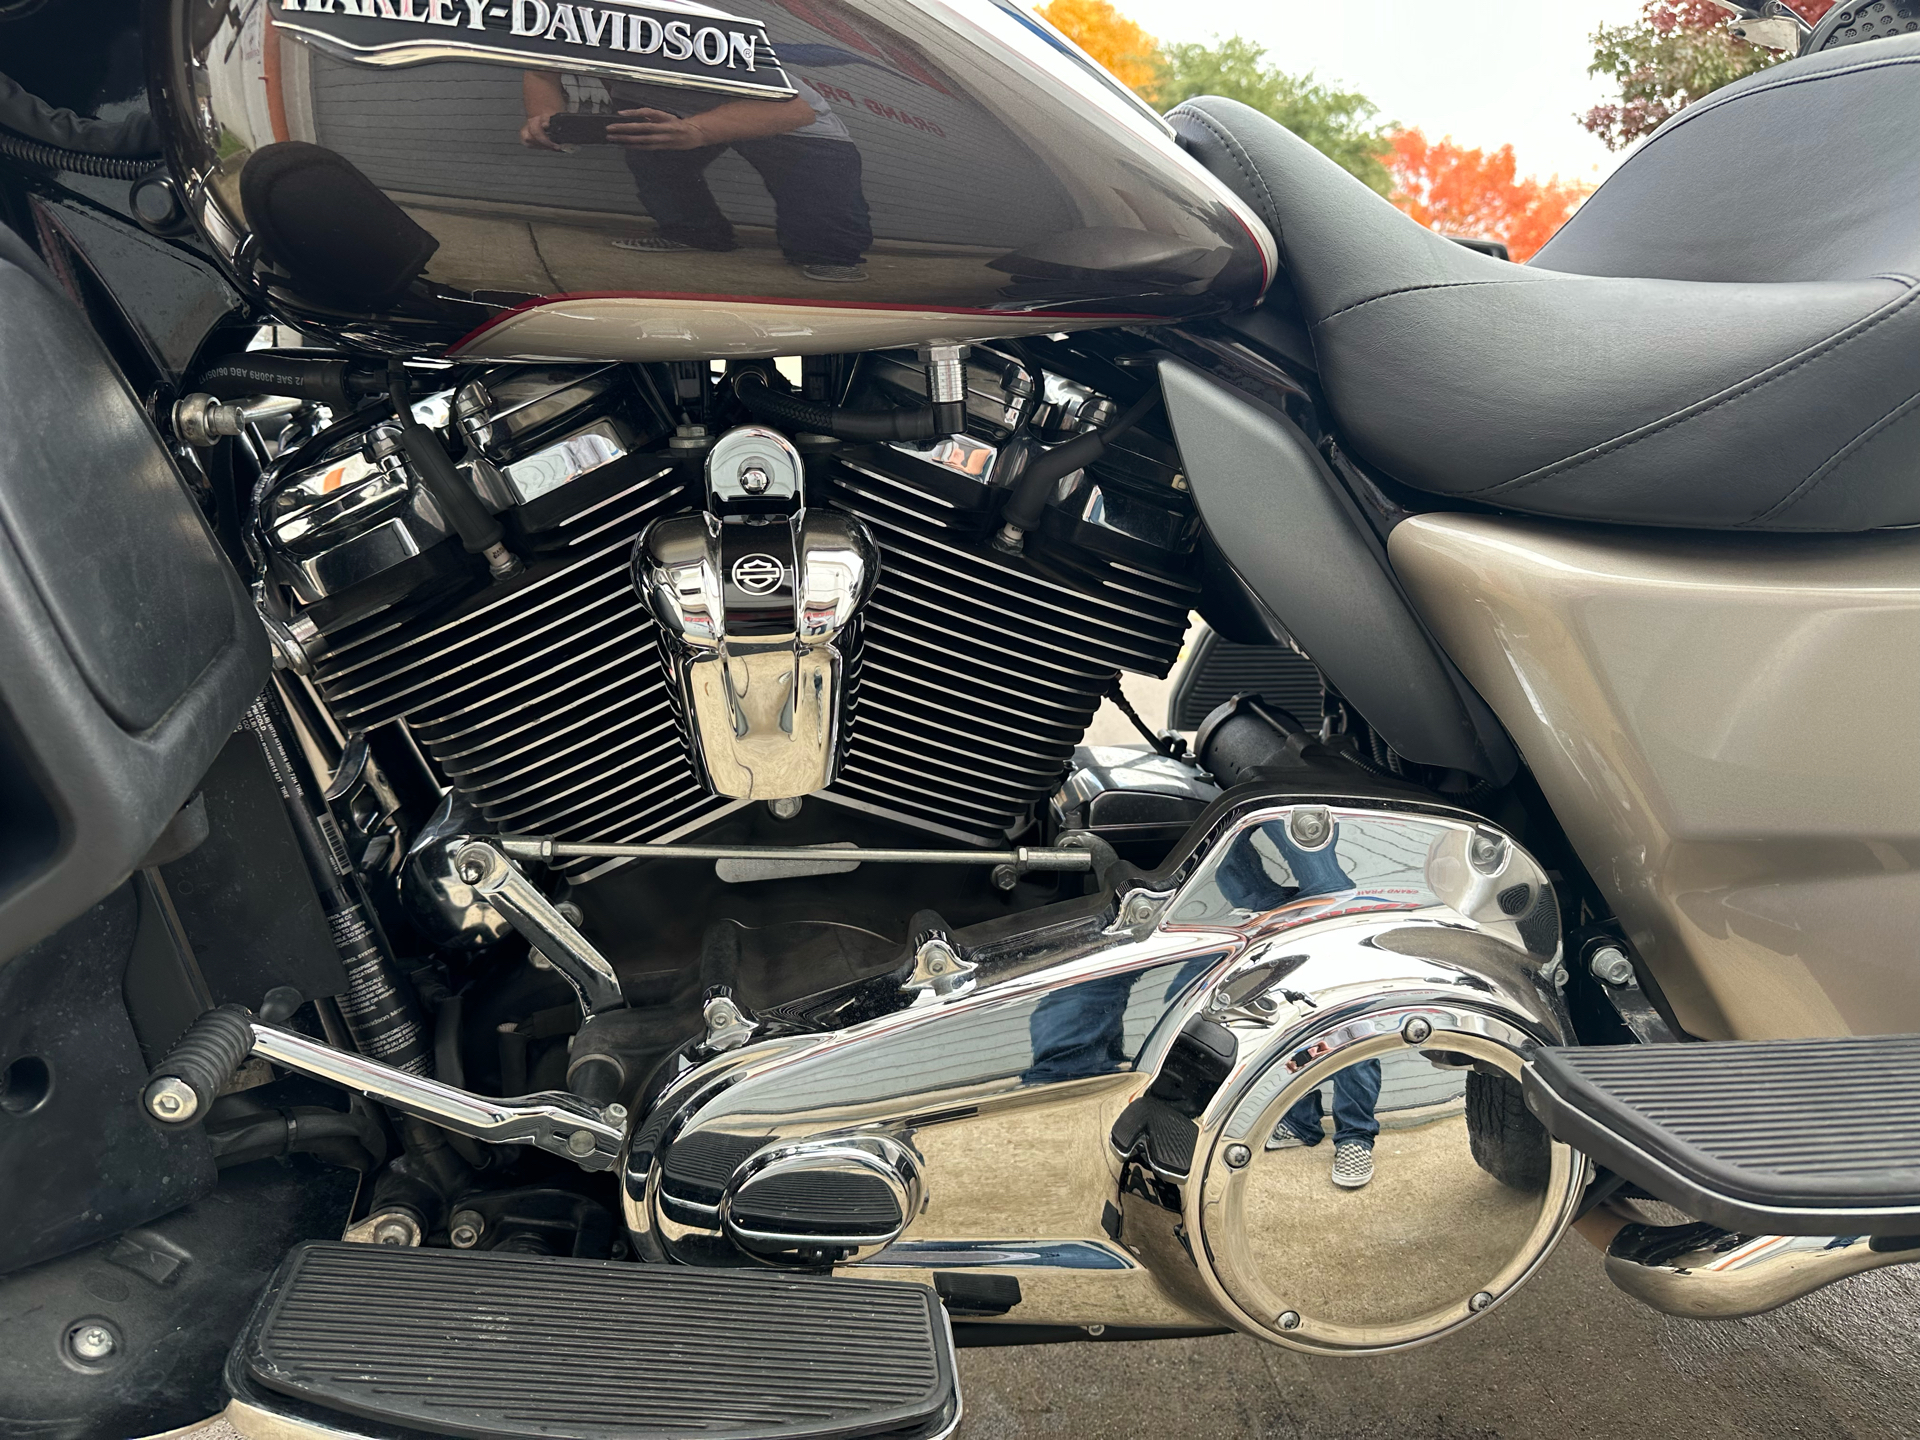 2018 Harley-Davidson Tri Glide® Ultra in Grand Prairie, Texas - Photo 6